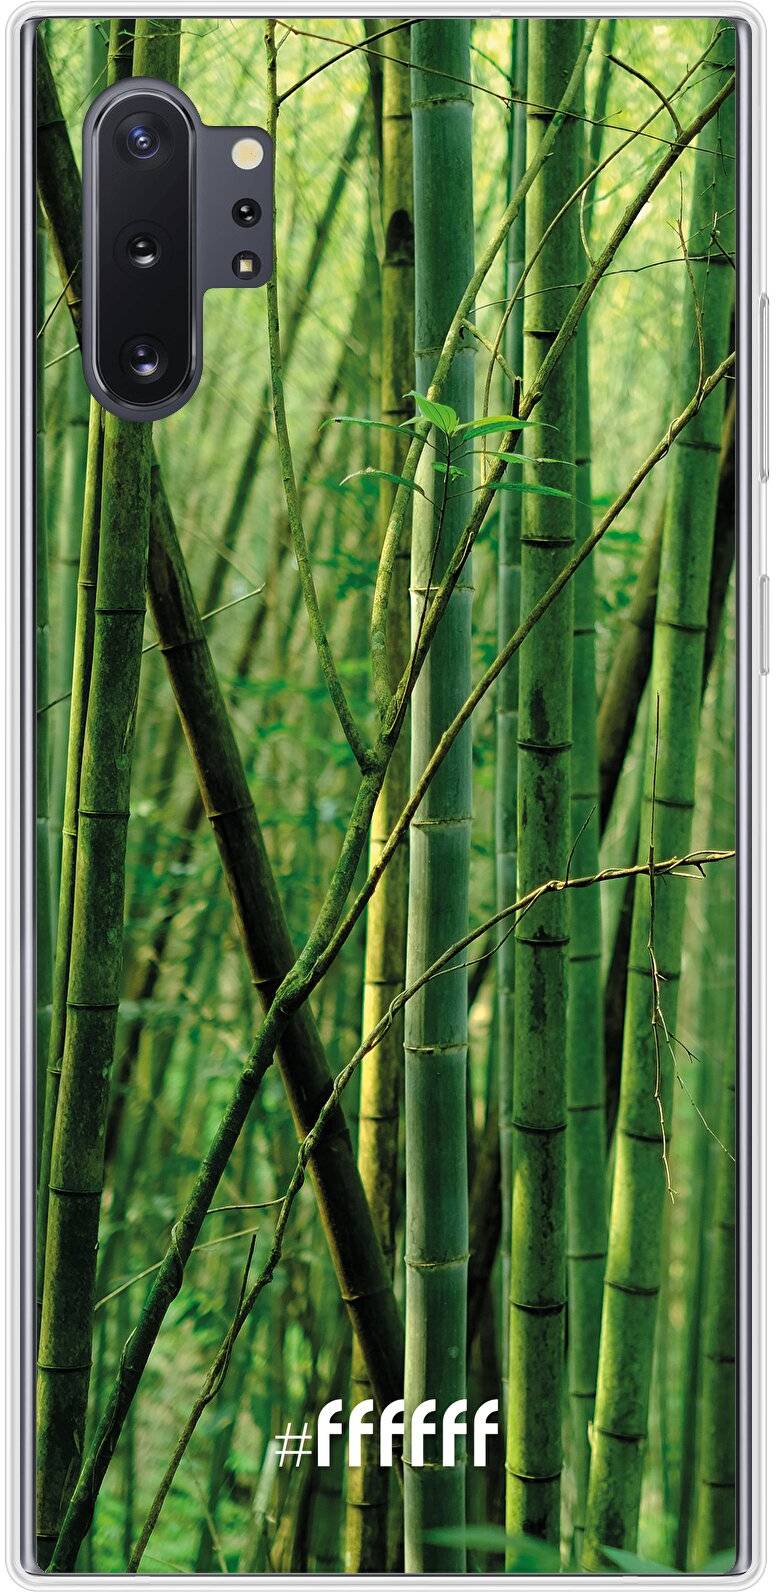 Bamboo Galaxy Note 10 Plus